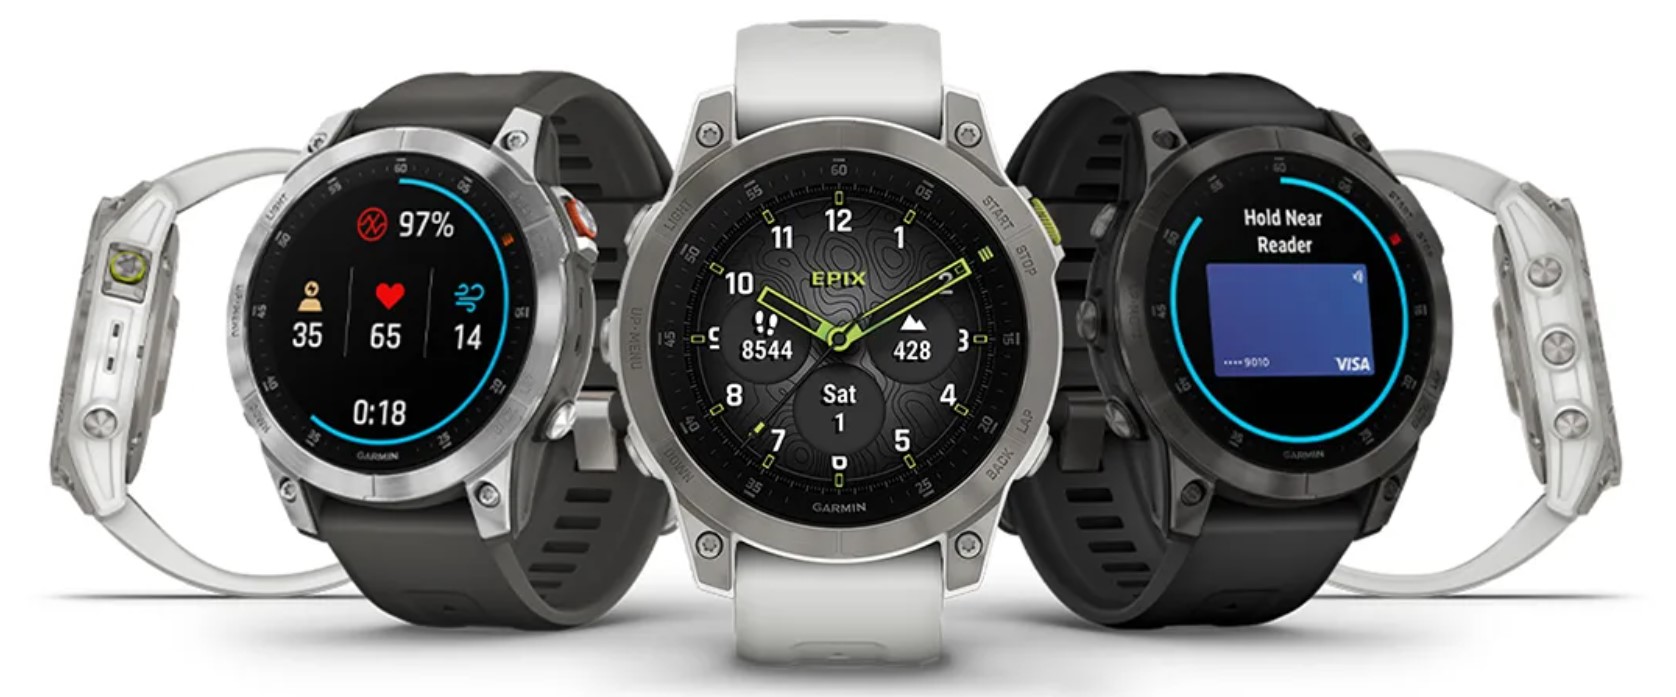 Garmin Epix Gen 2 Smartwatch Review: Pretty, Costly